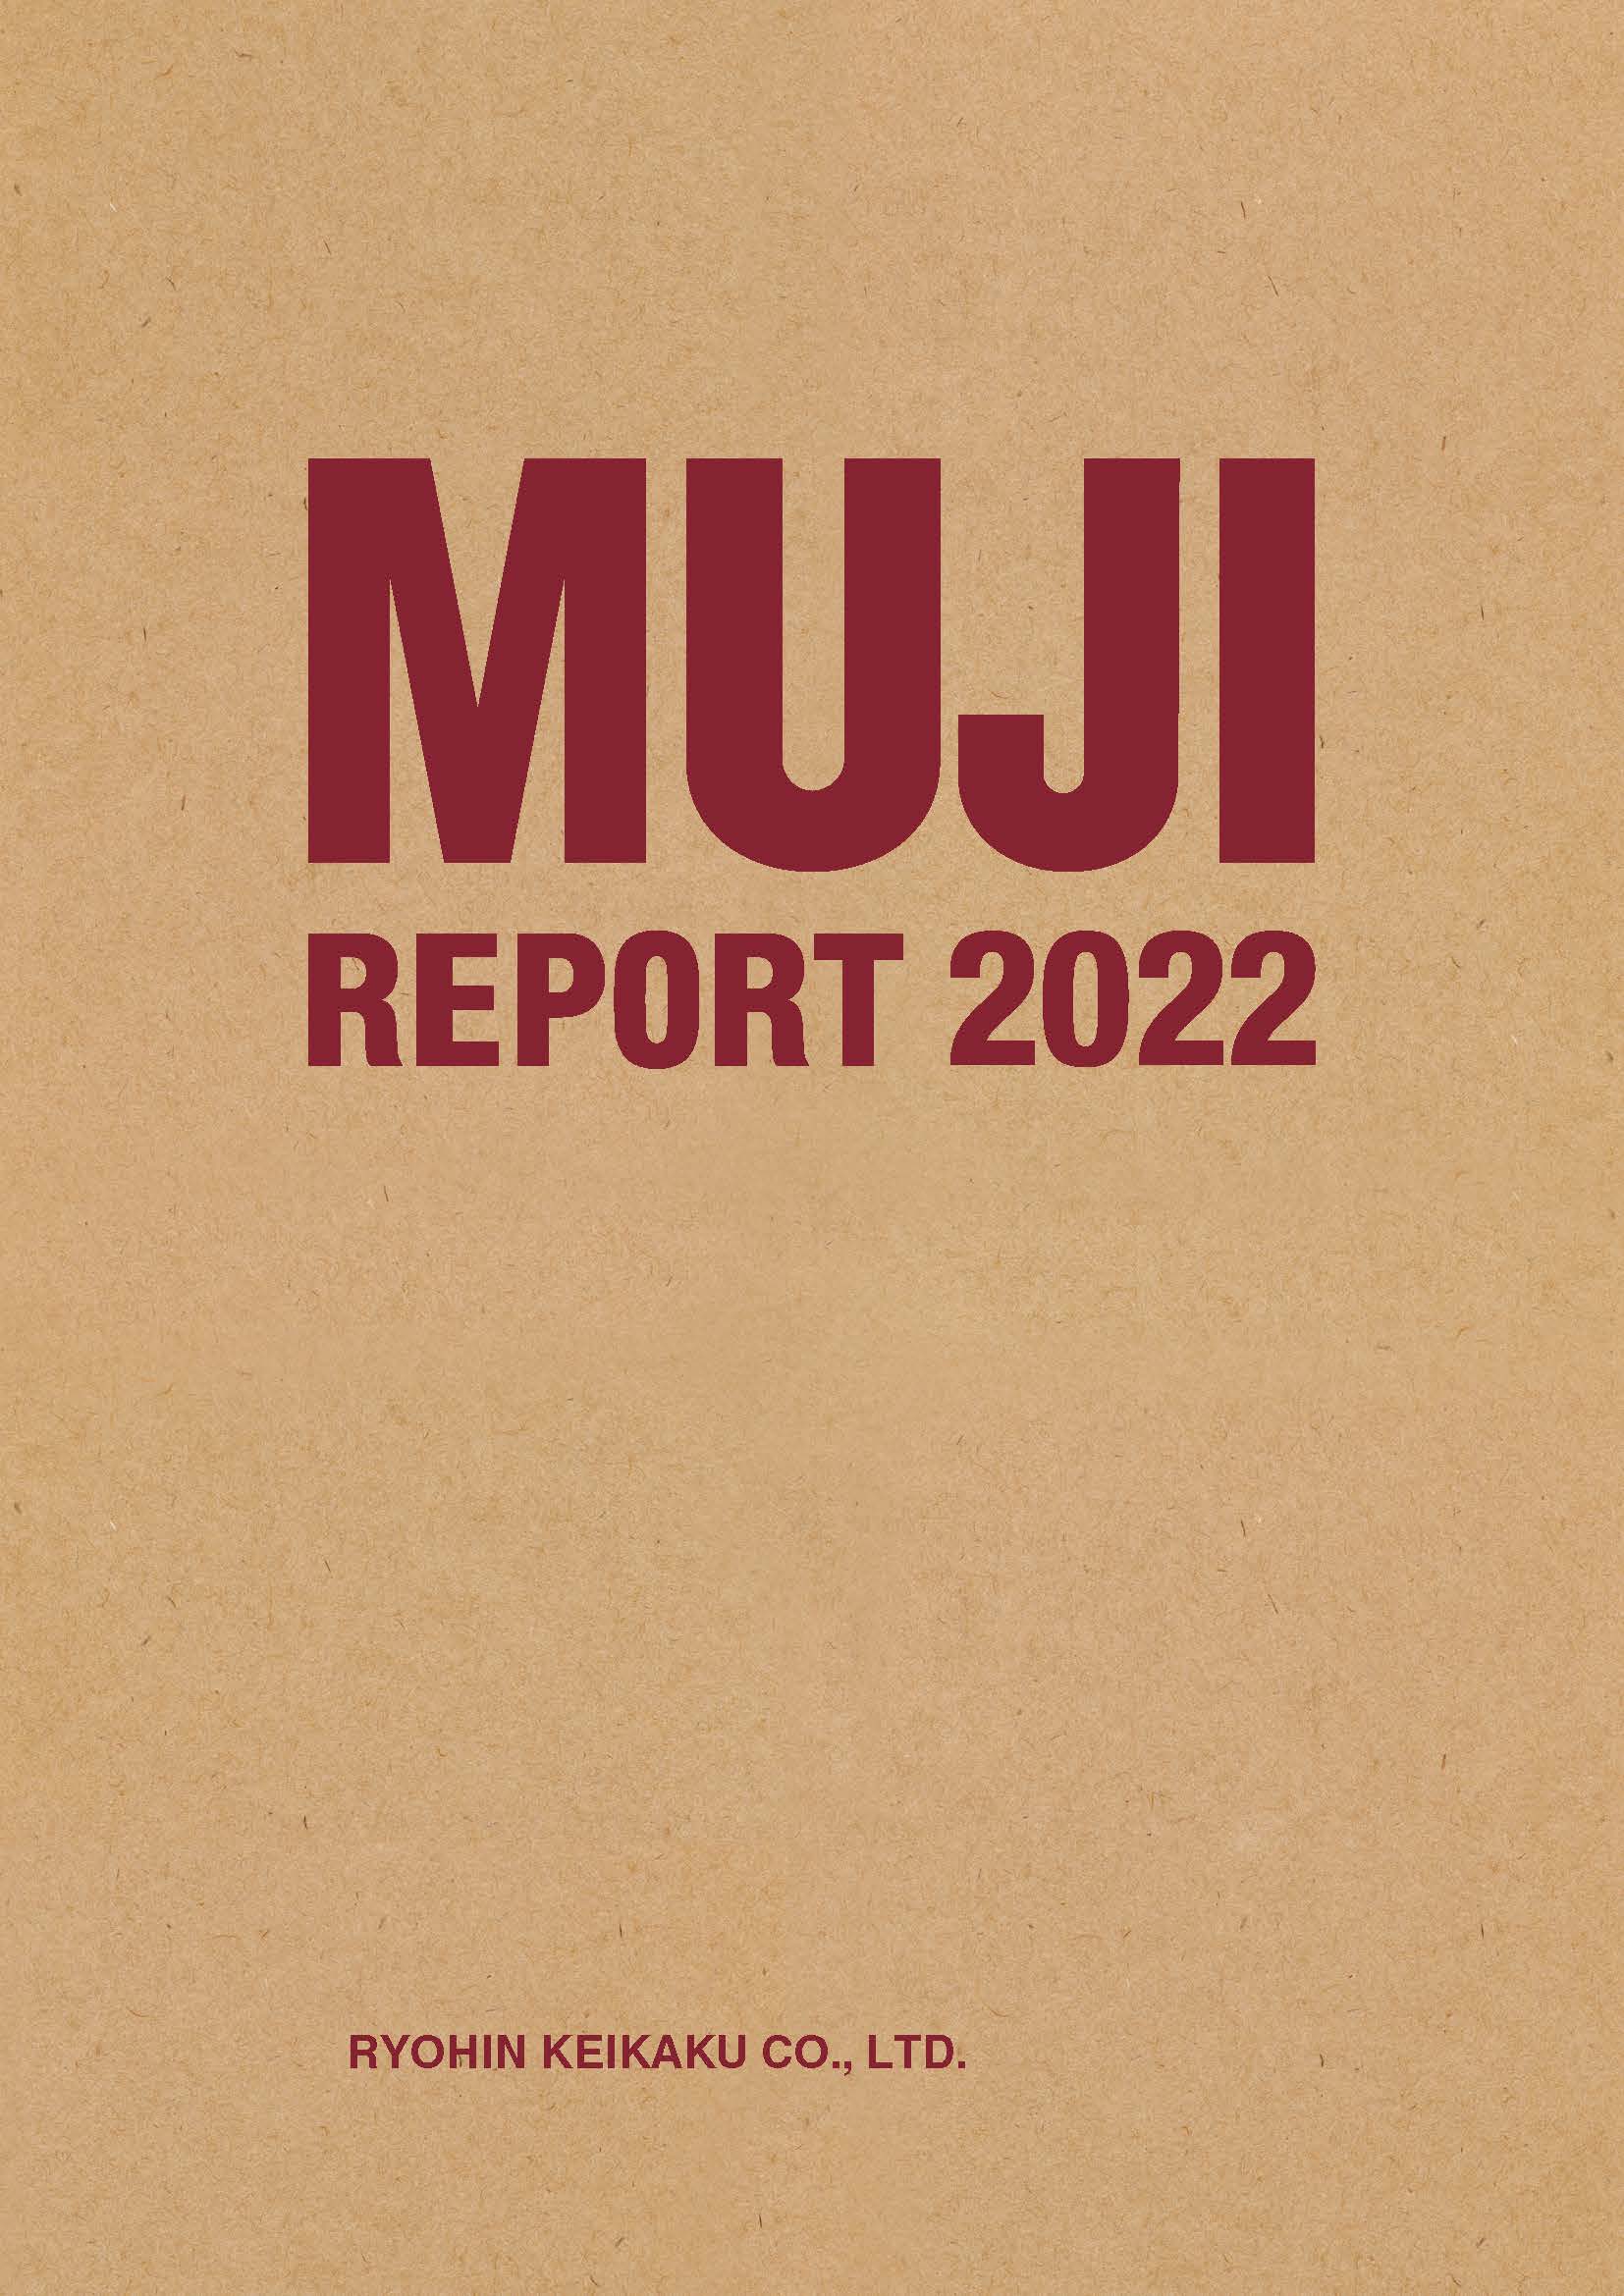 MUJI REPORT 2022